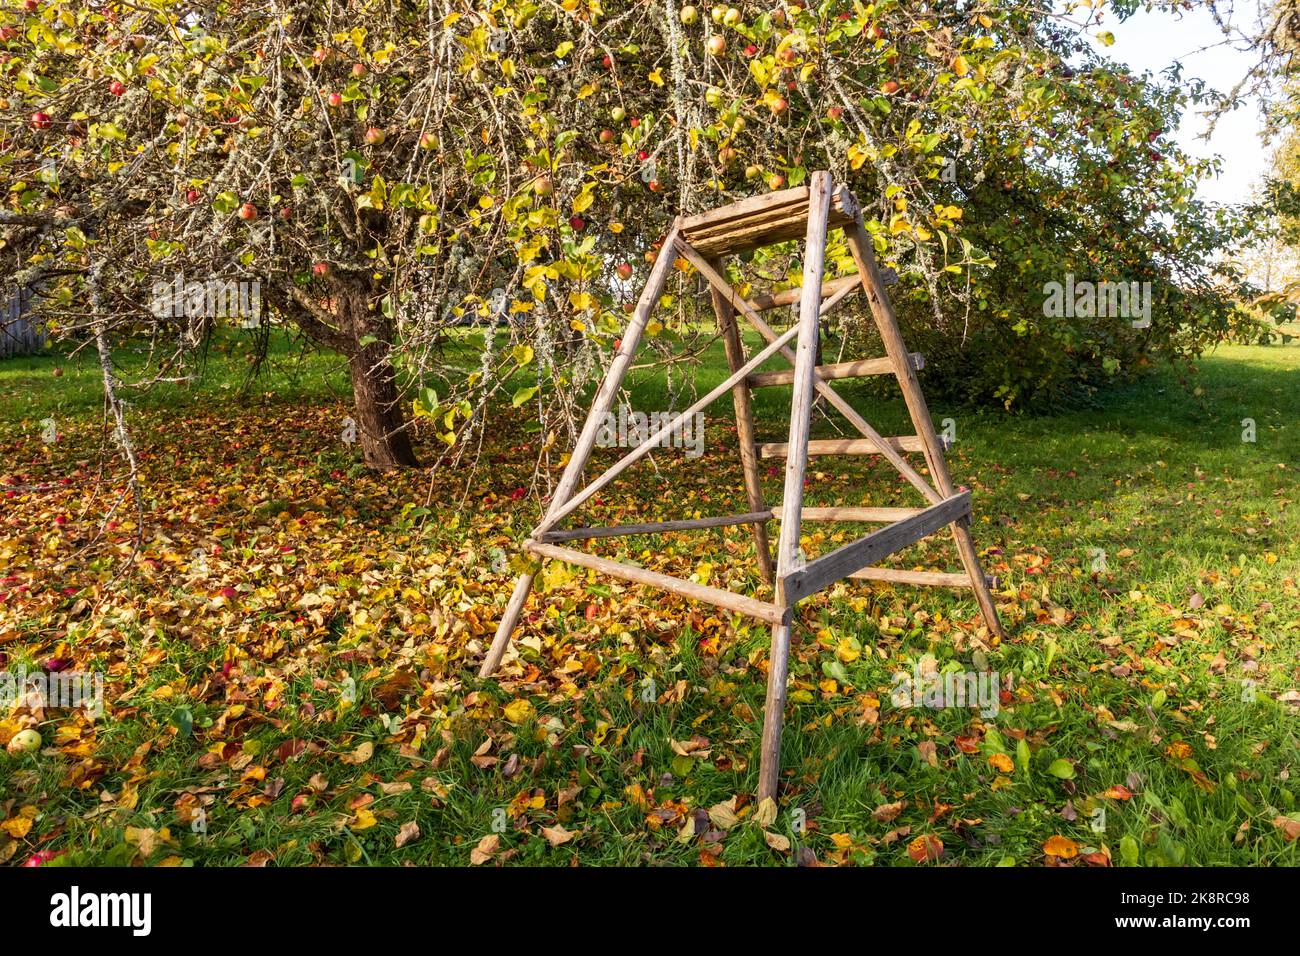 Wooden ladder in a apple tree garden Stock Photo